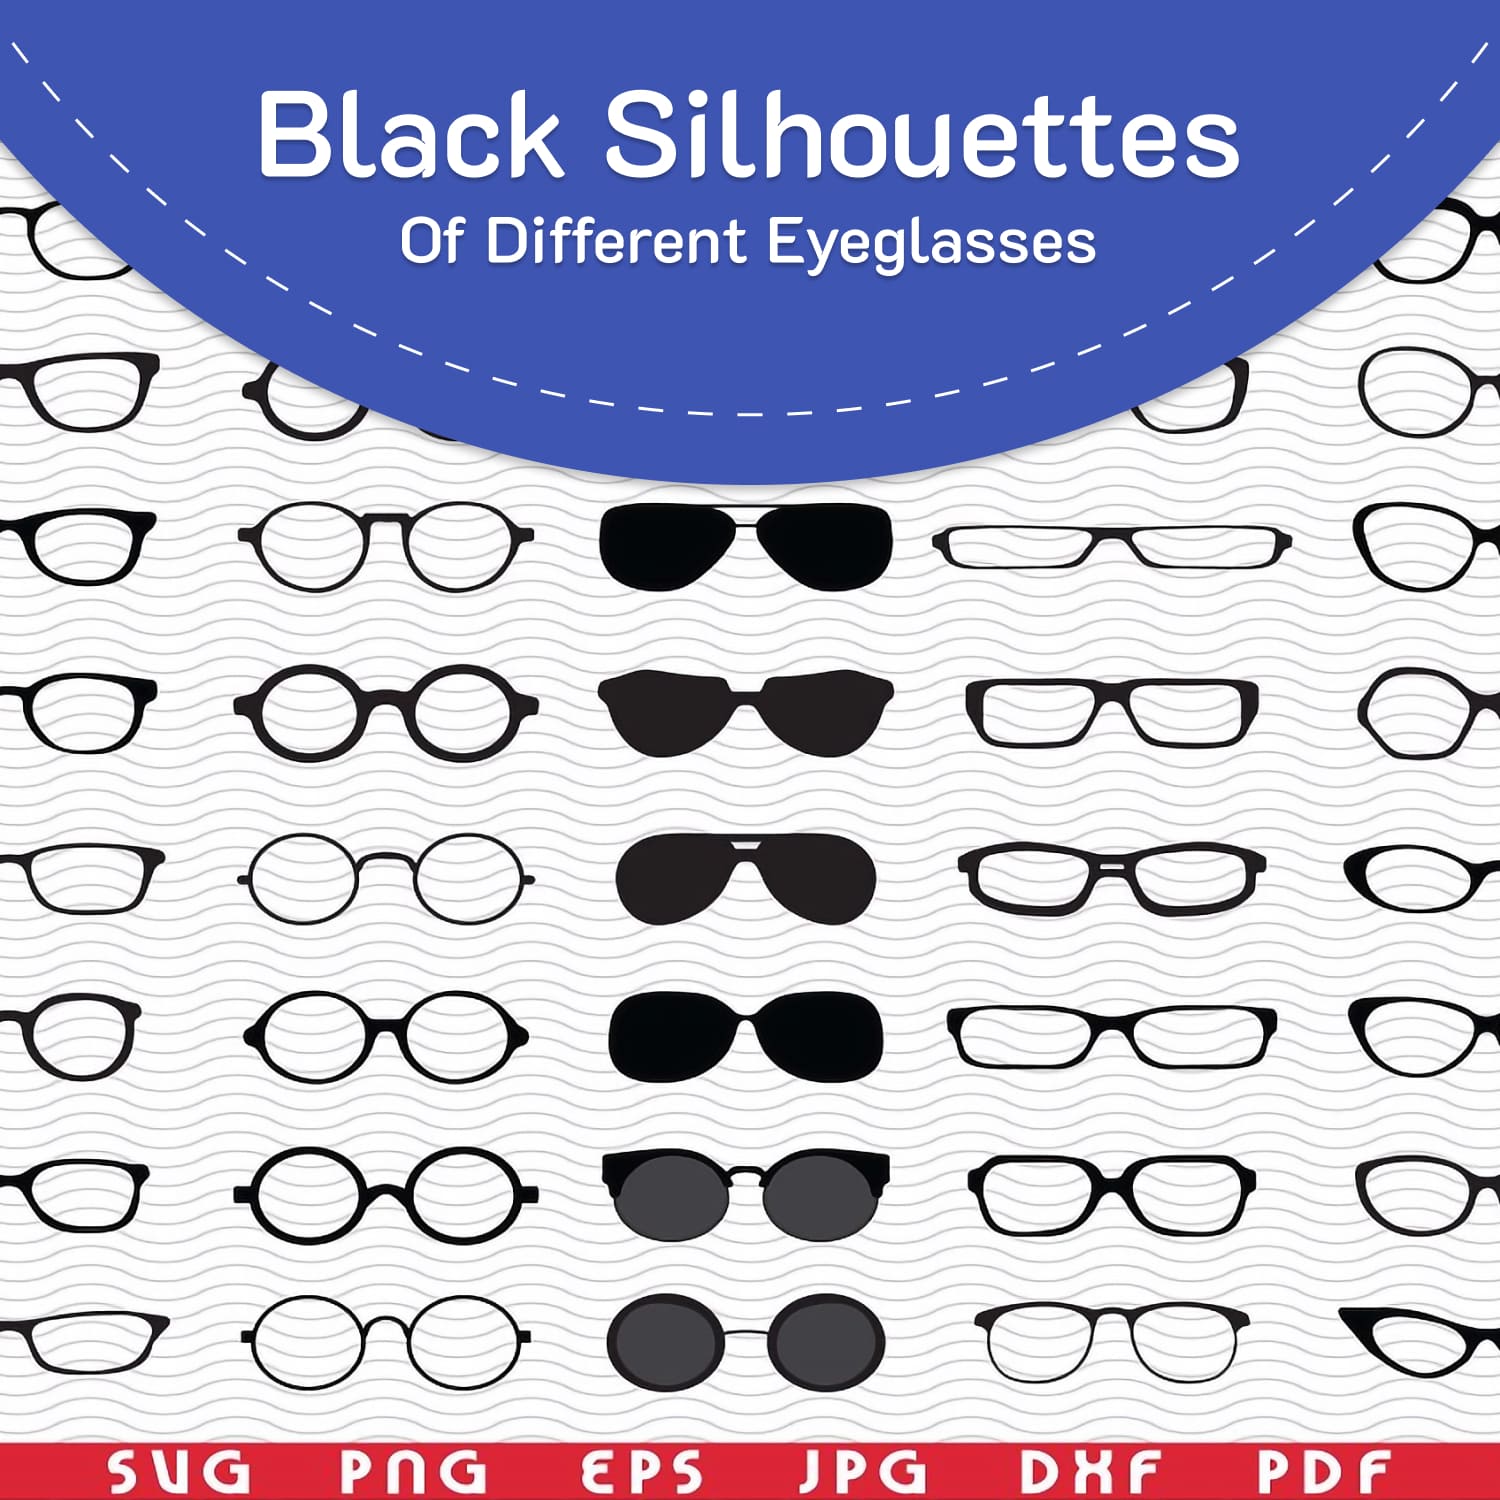 SVG Eyeglasses, Black silhouettes, main image.